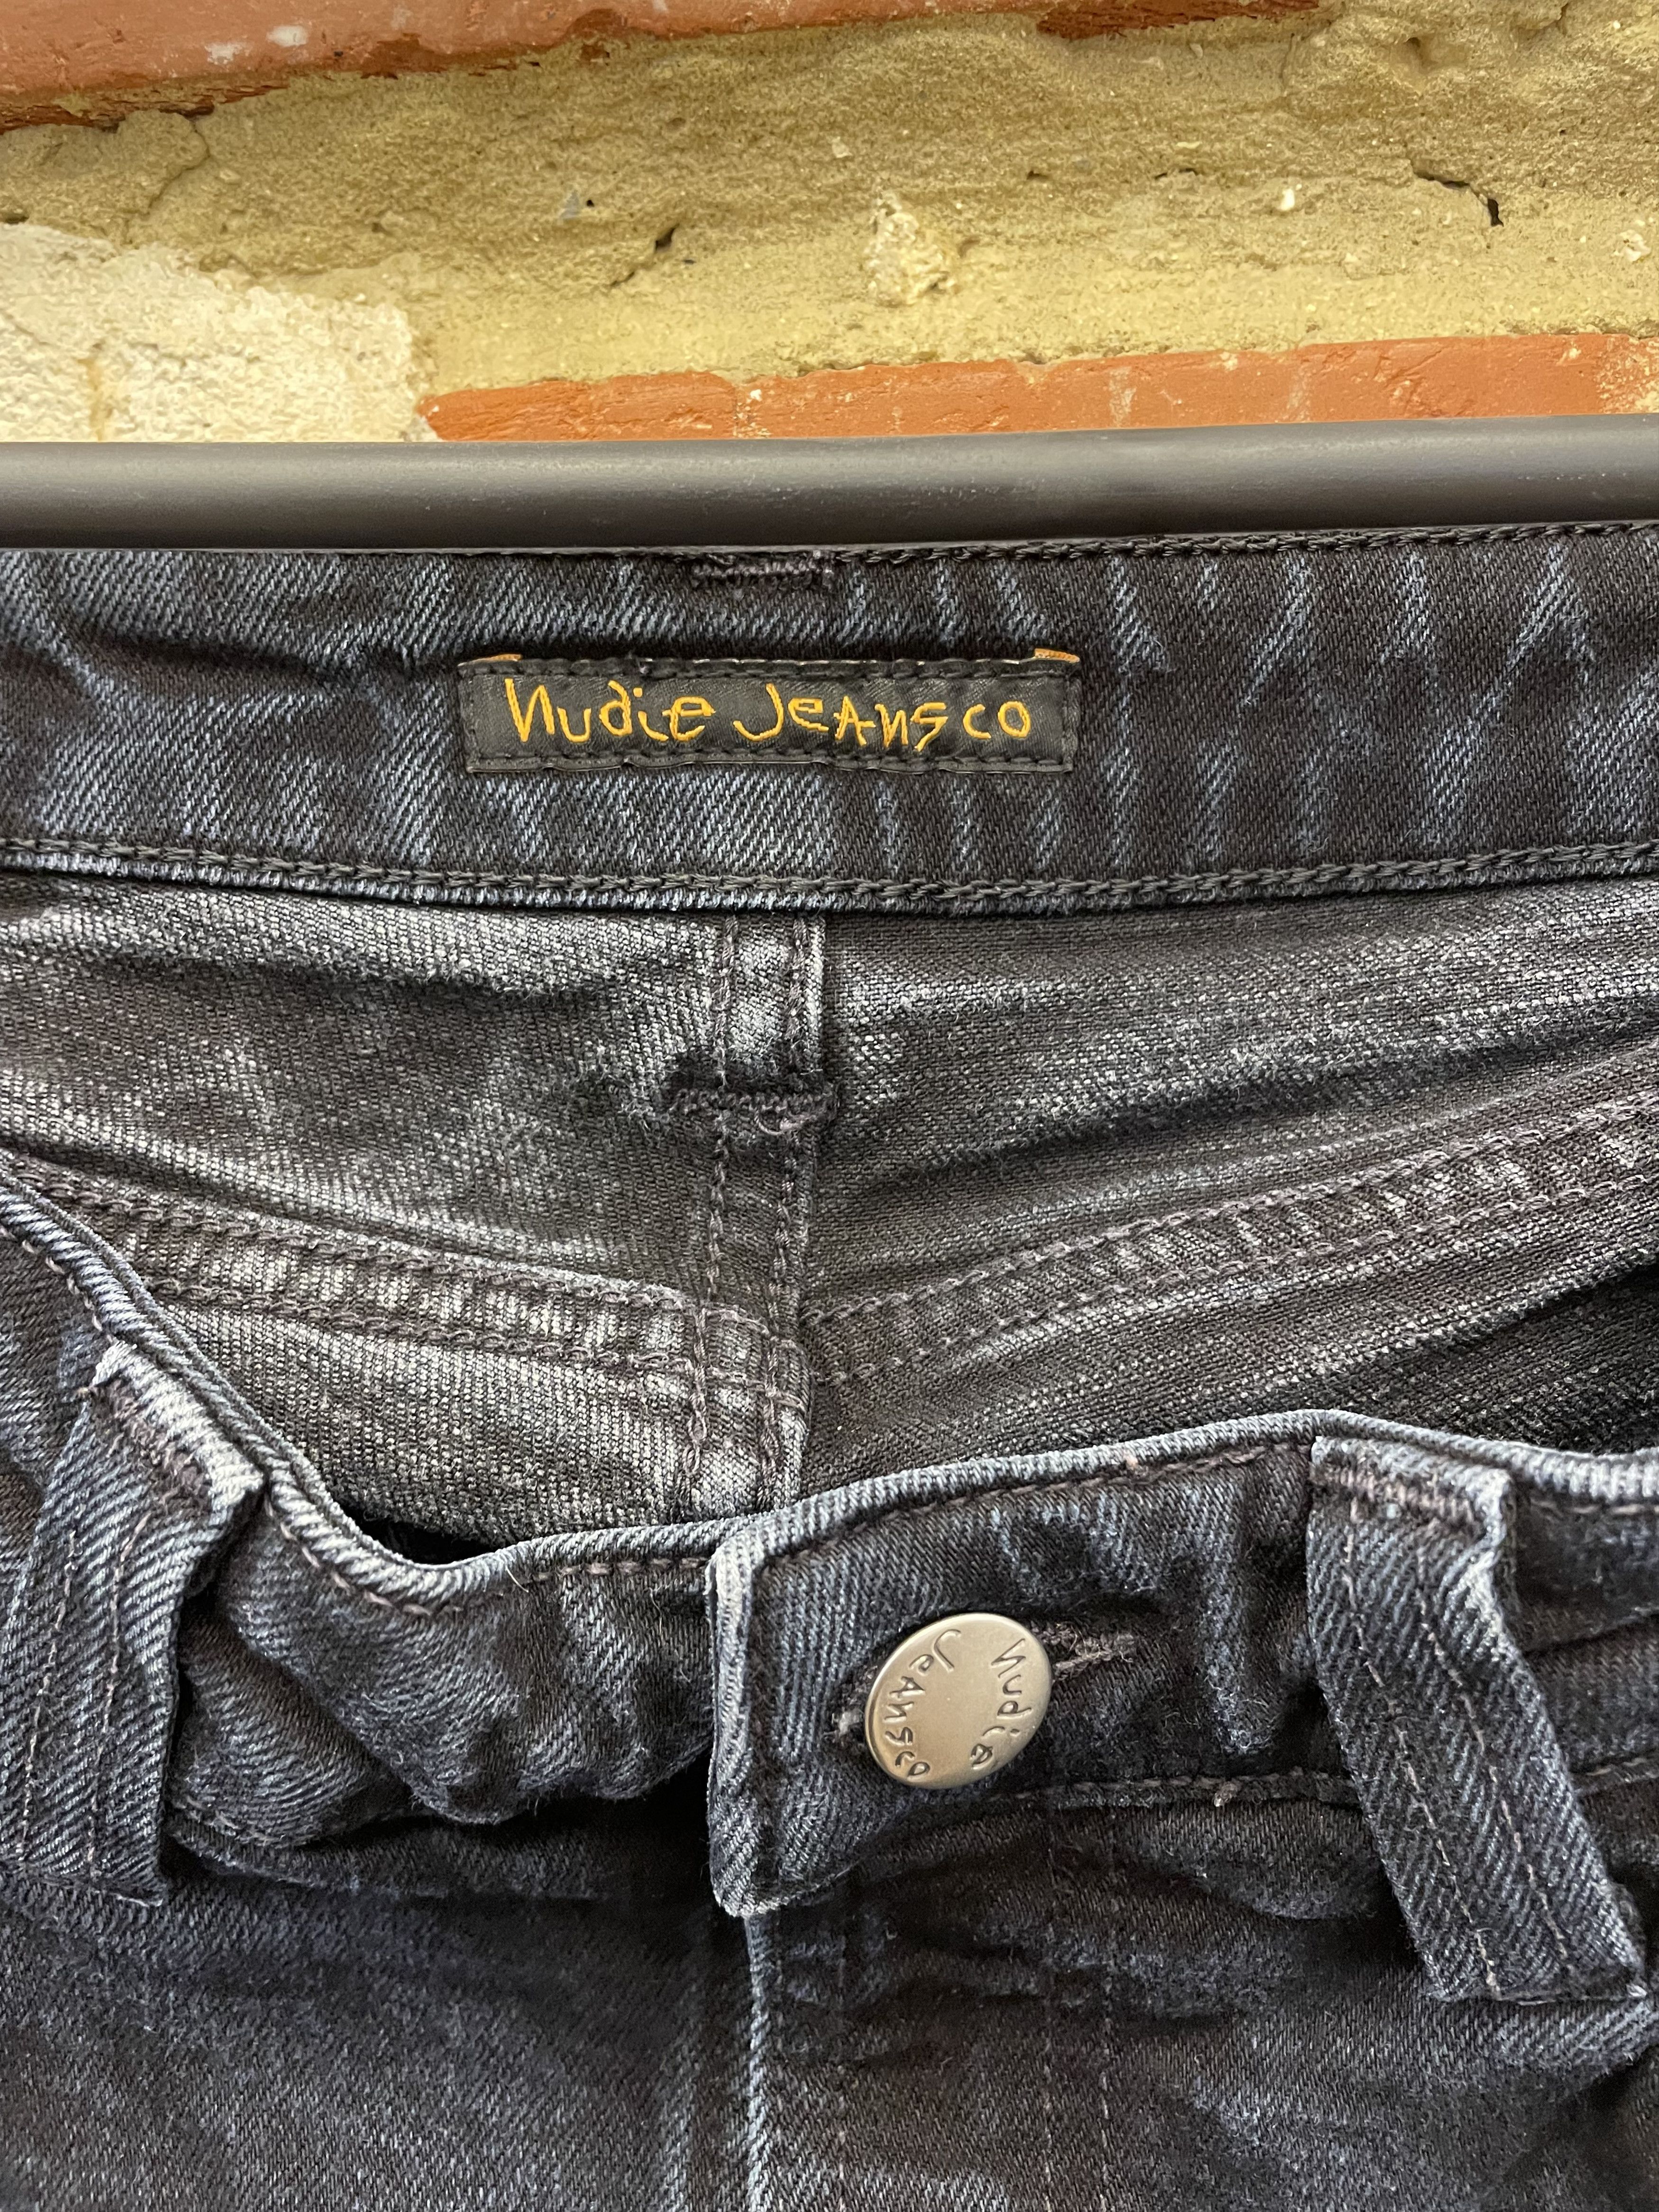 Nudie Jeans Vintage Nudie Jeans Co Jeans Size 30" / US 8 / IT 44 - 2 Preview